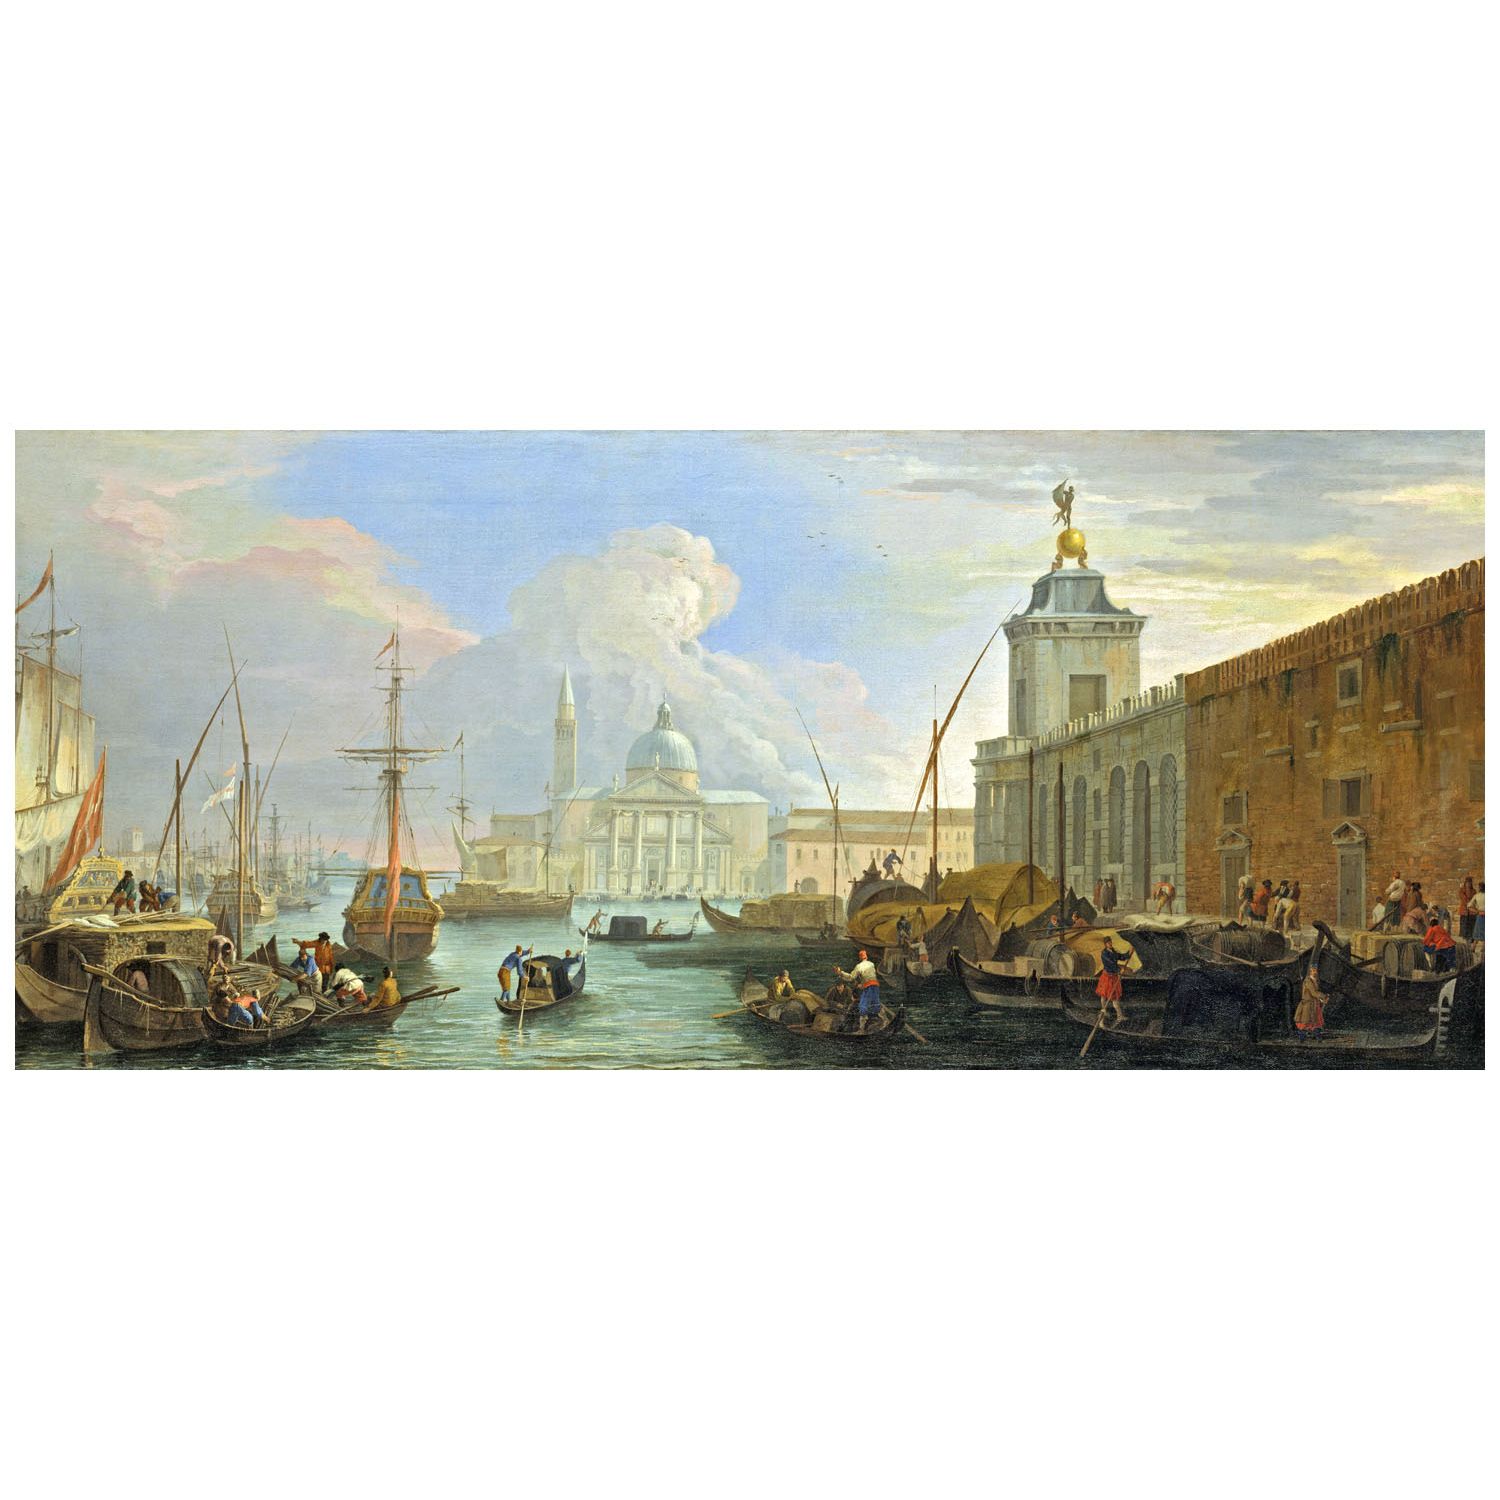 Luca Carlevarijs. Dogana. 1709. Metropolitan Museum of Art NY